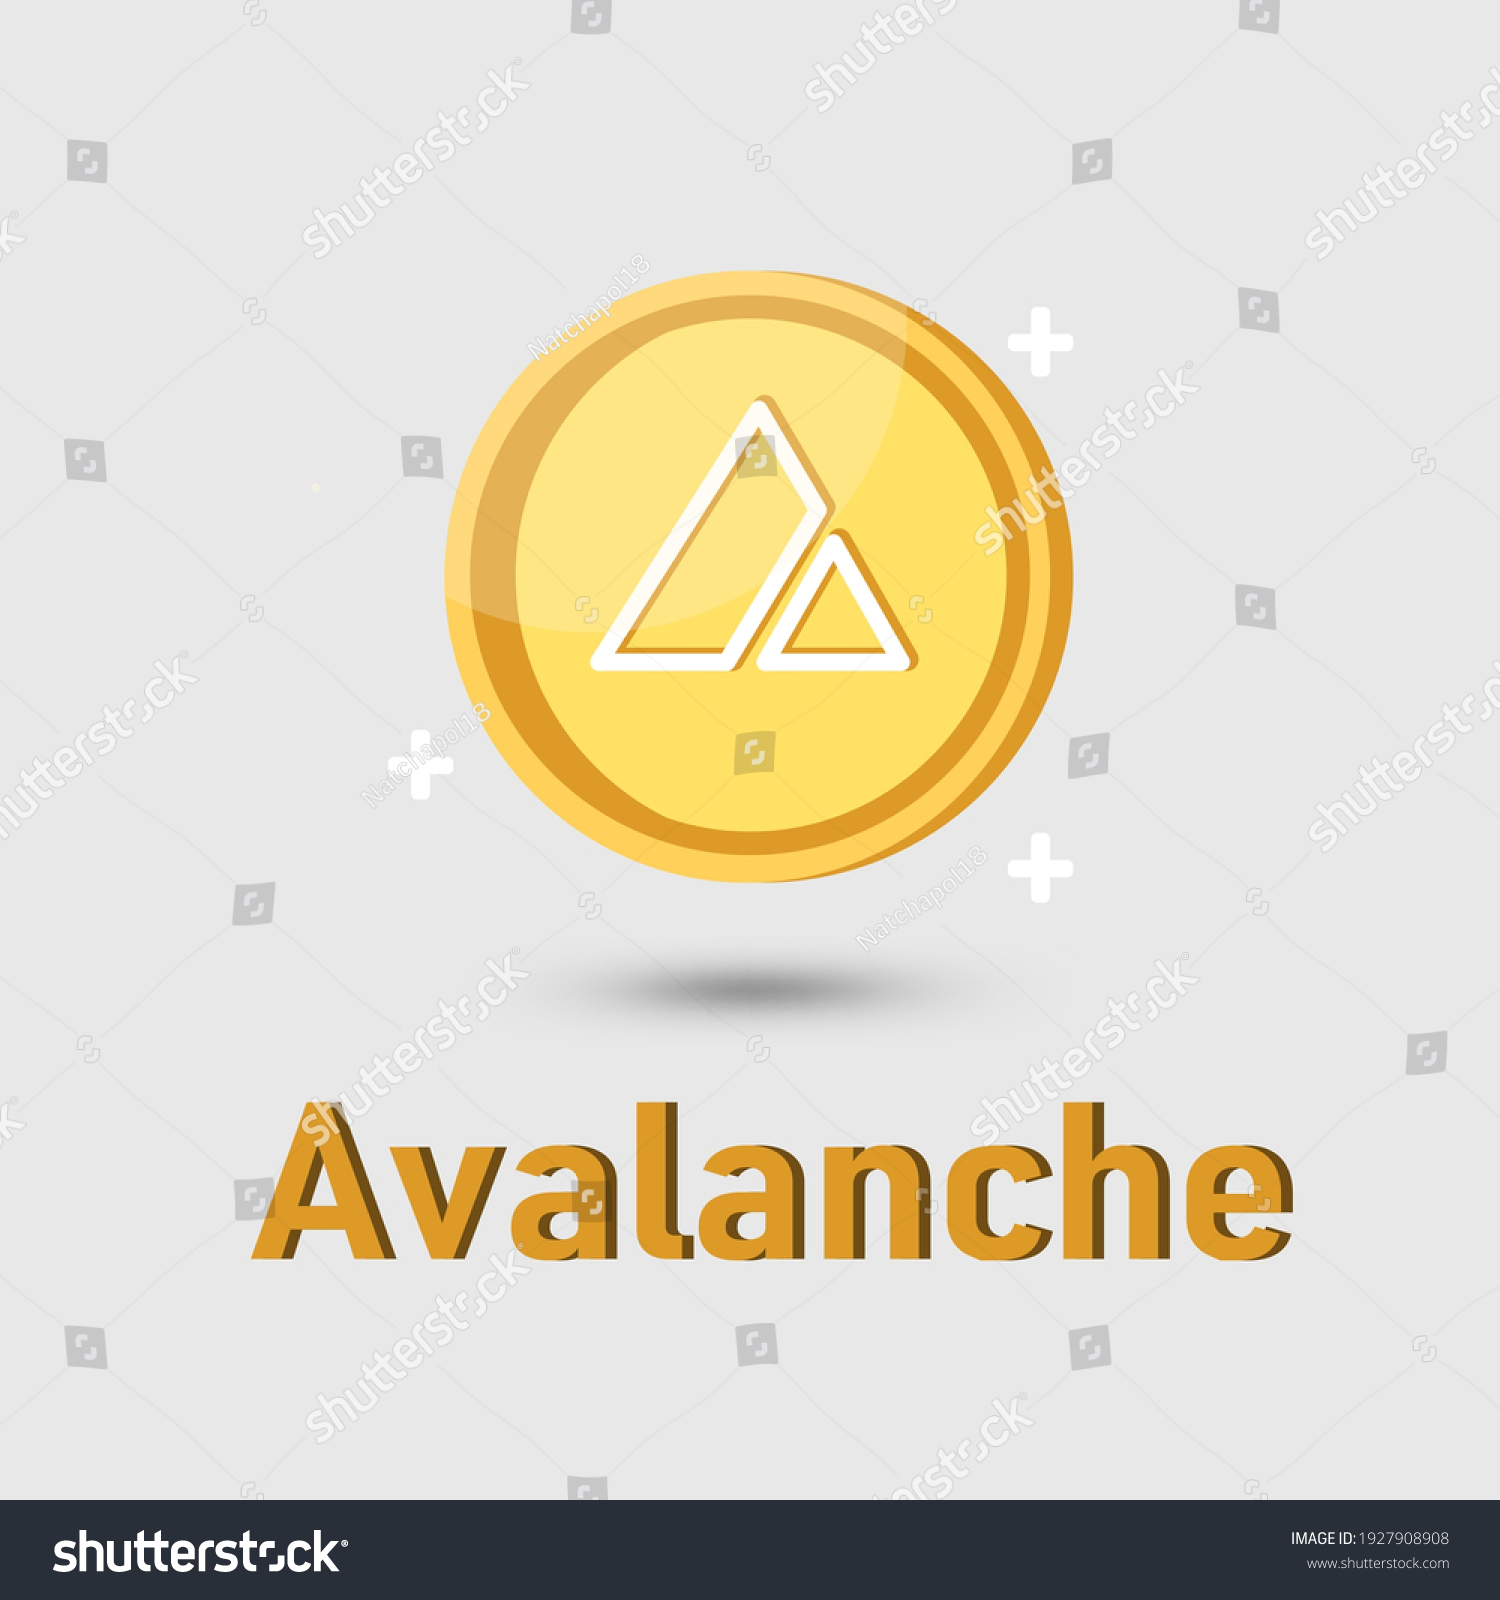 Avalanche coin